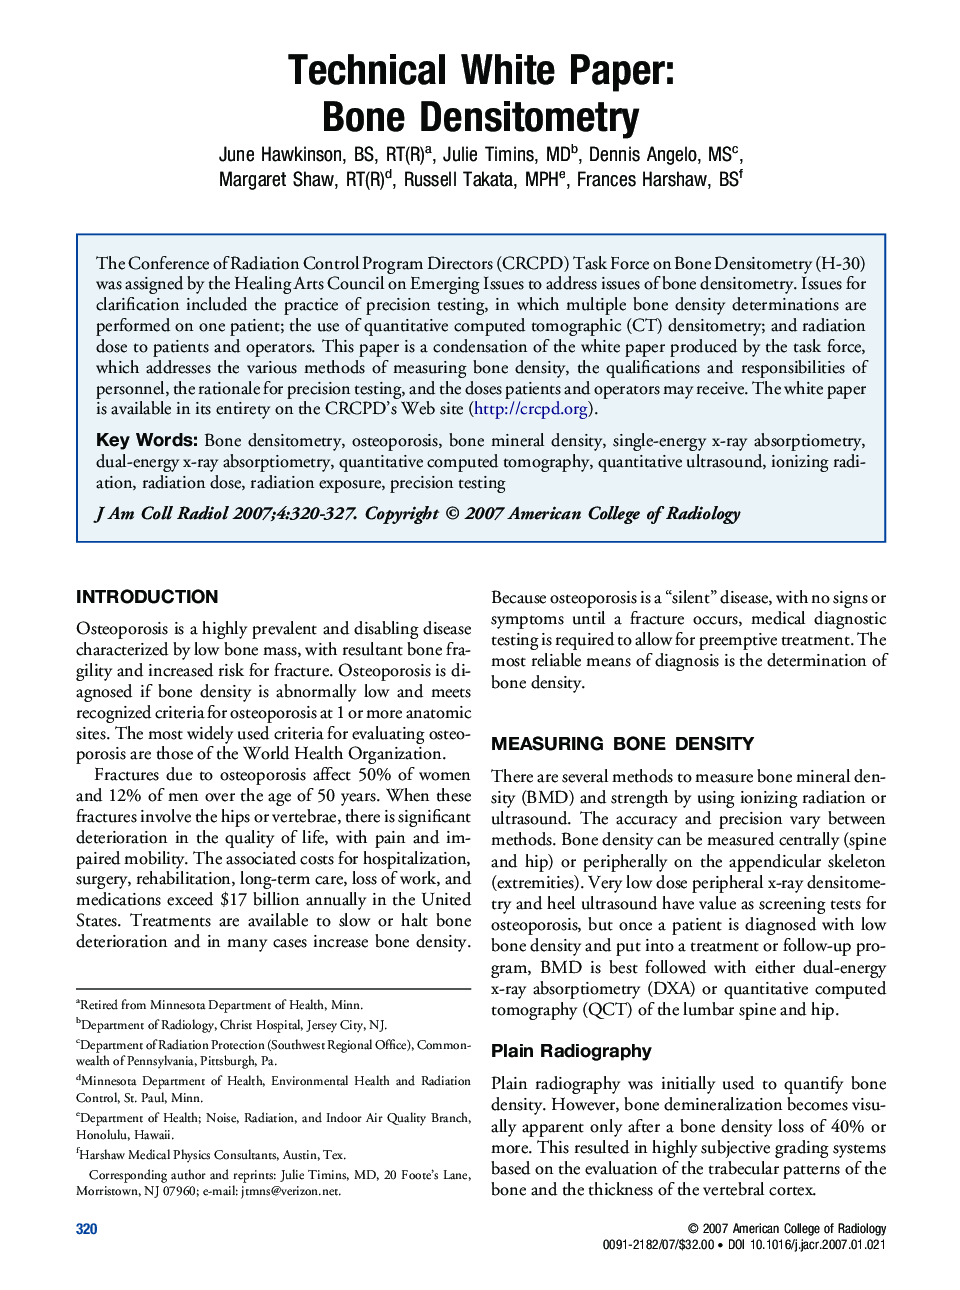 Technical White Paper: Bone Densitometry